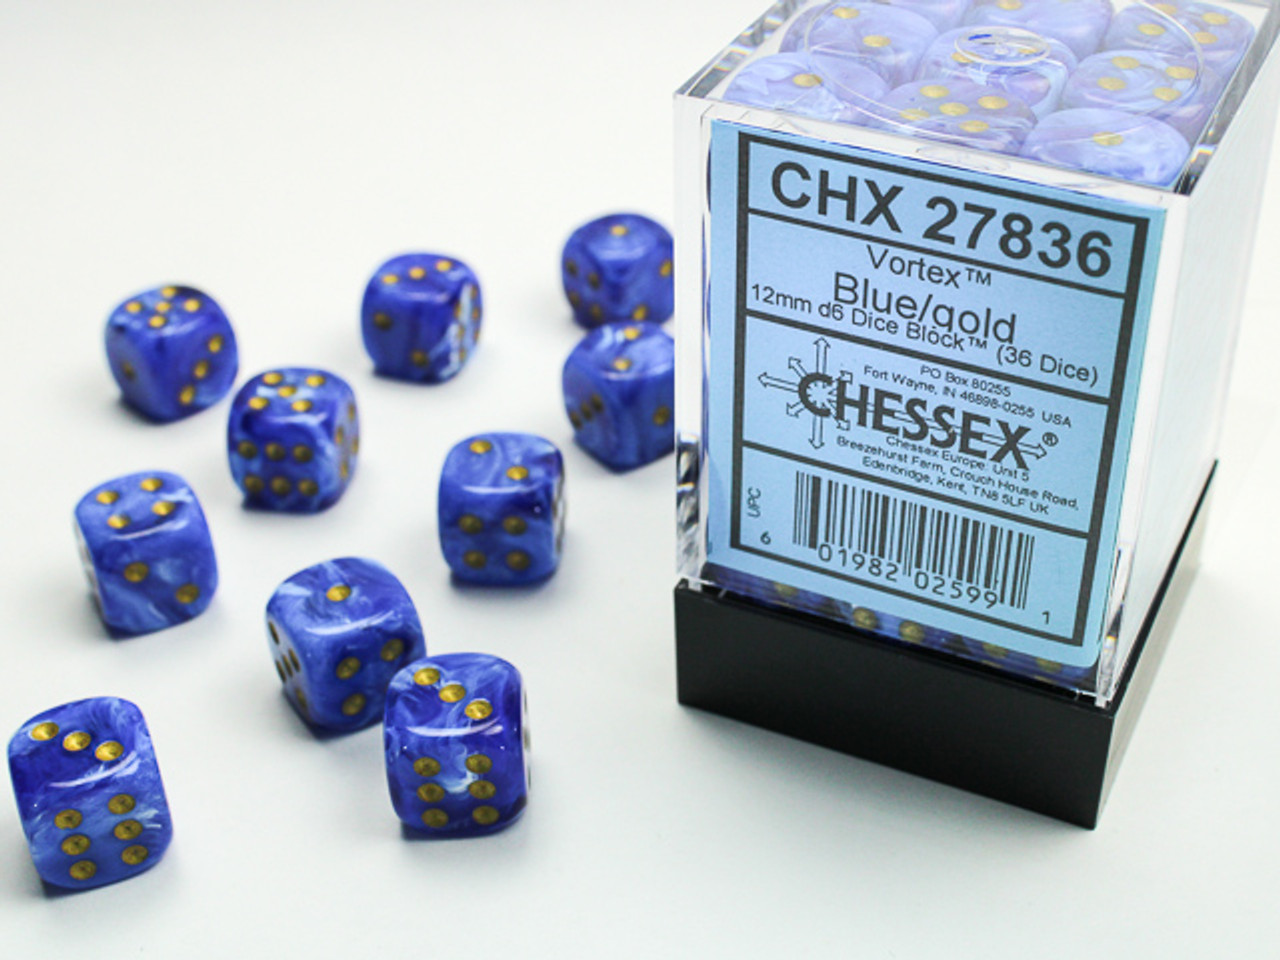 27836 - Vortex® 12mm d6 Blue/gold Dice Block™ (36 dice)